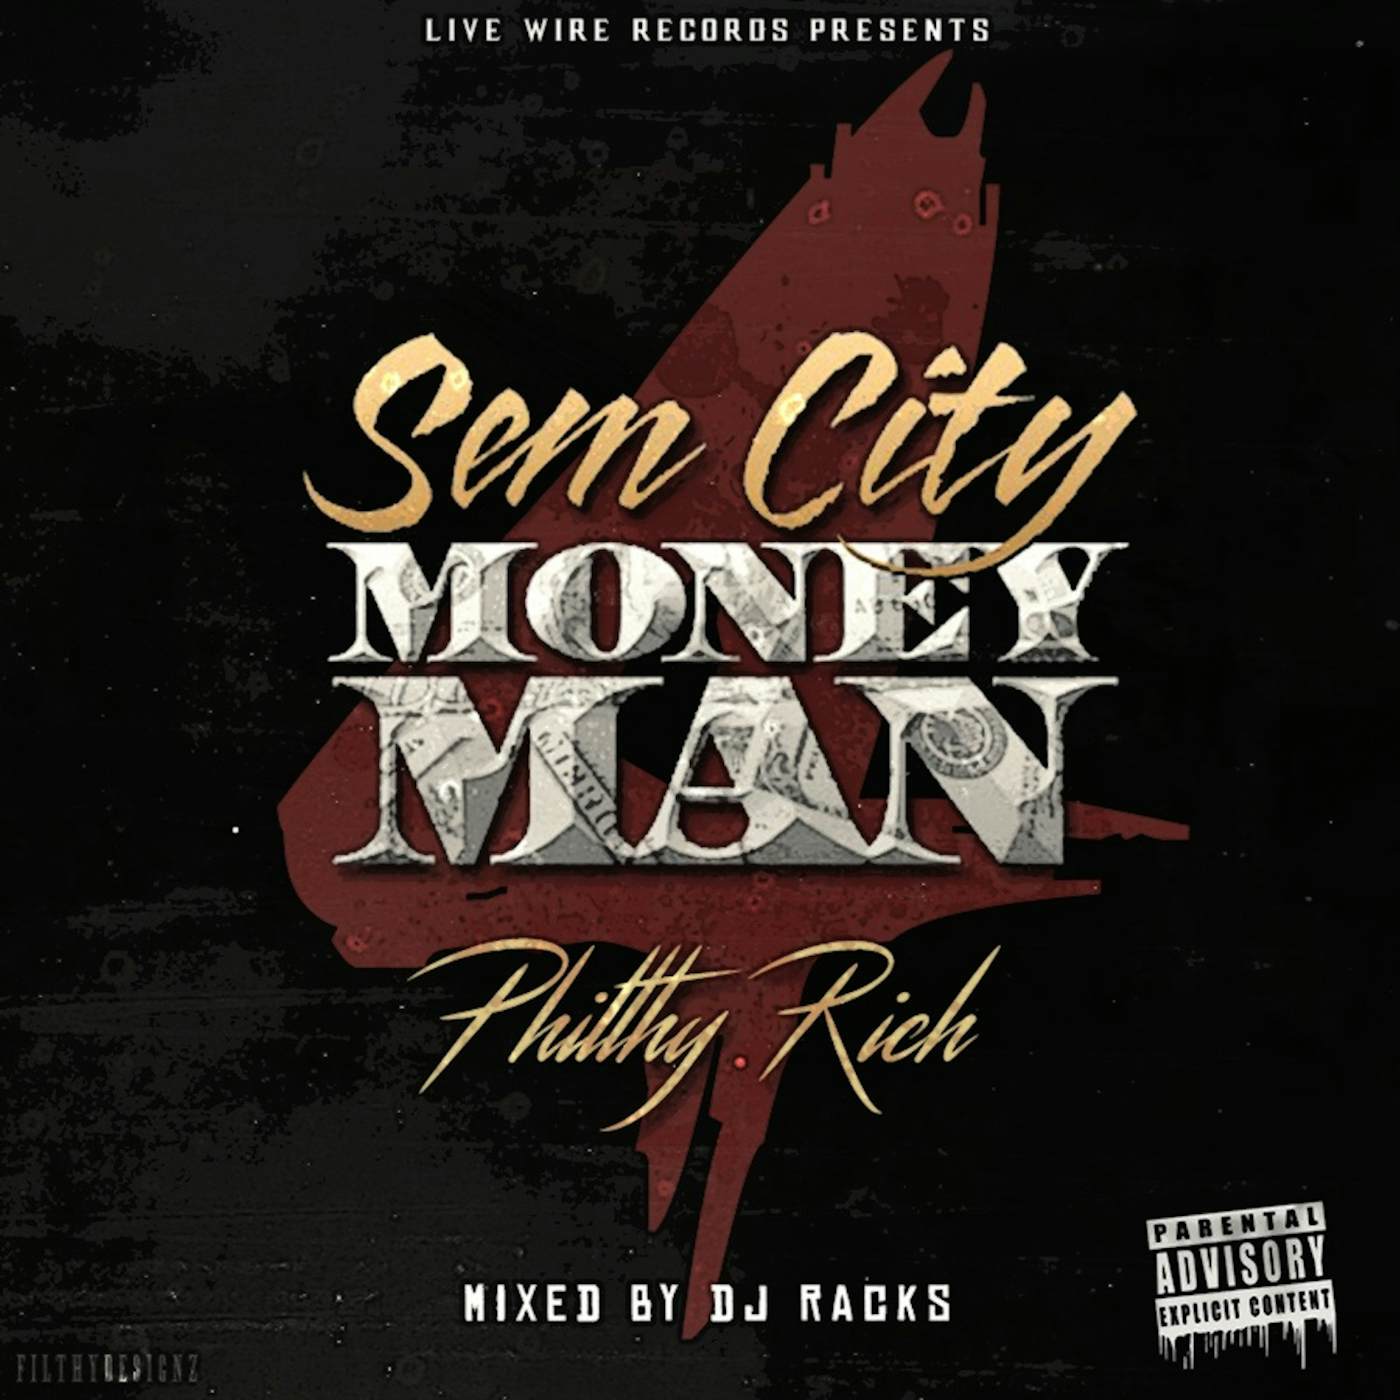 Philthy Rich SEM CITY MONEY MAN 4 CD